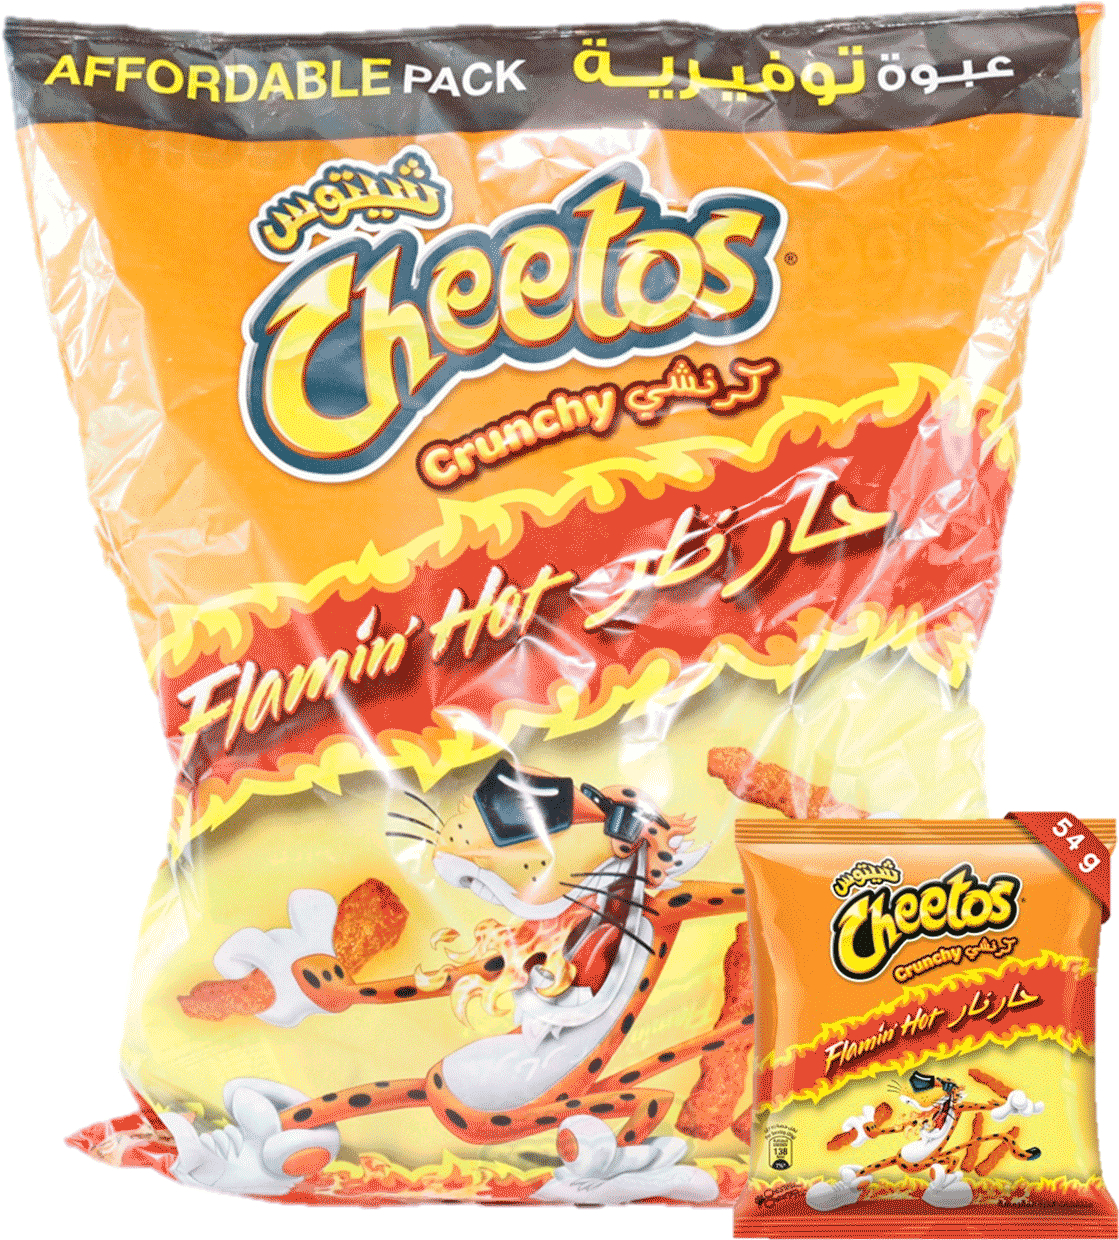 Würziges heißes Cheetos-PNG-Bild